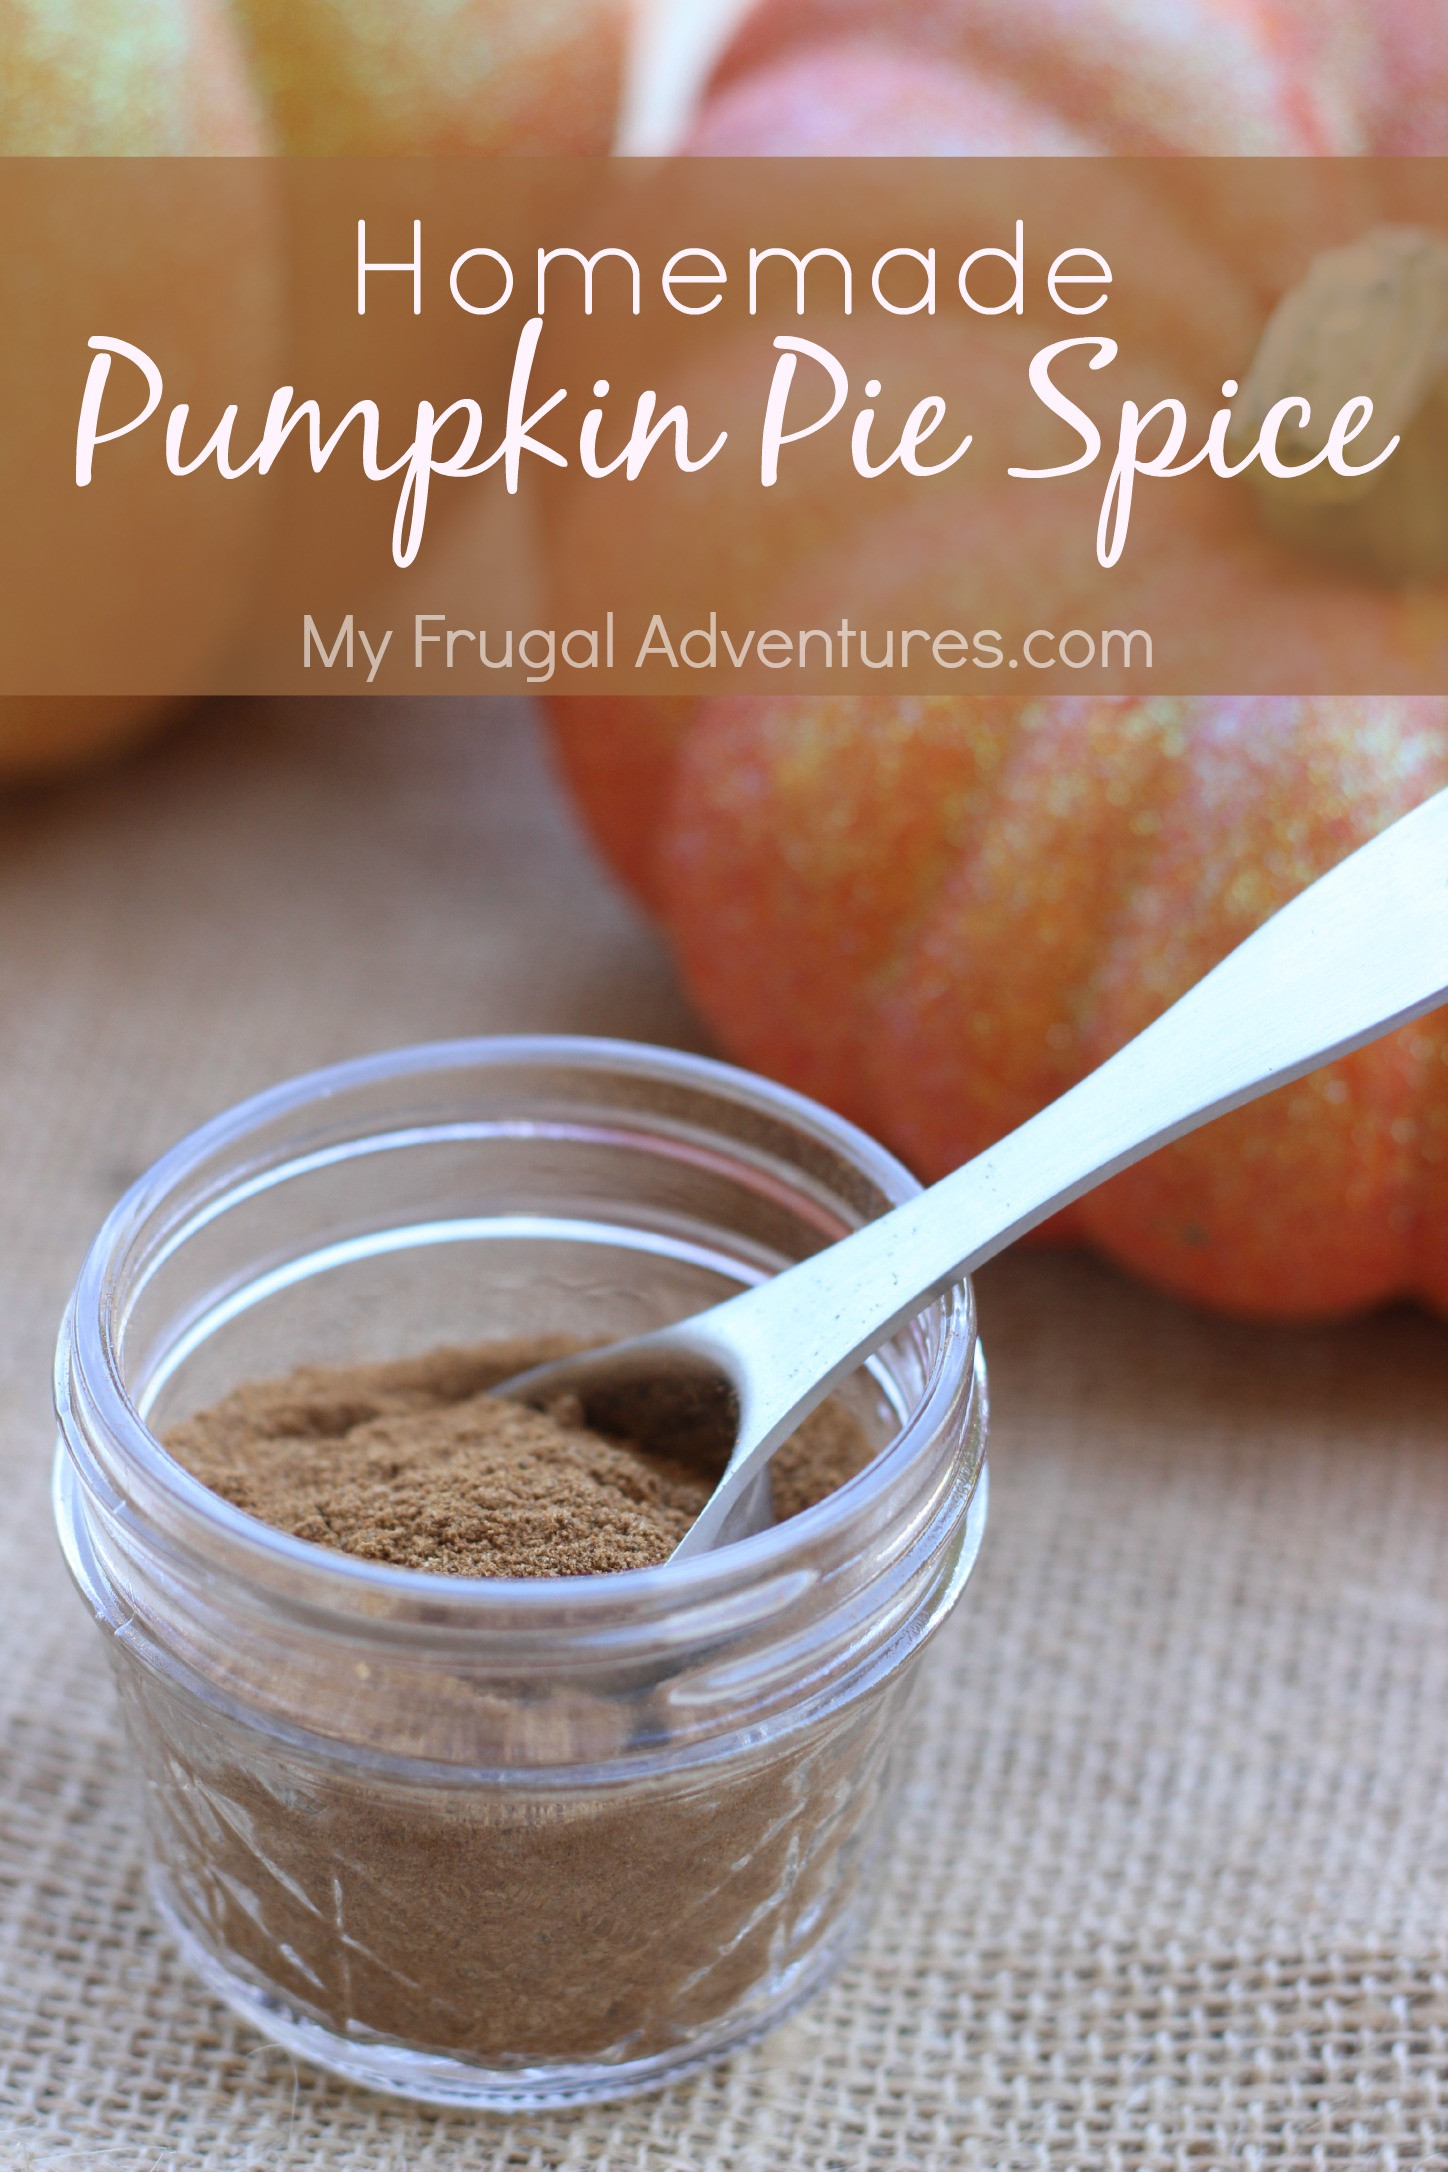 Homemade Pumpkin Pie Recipe
 Homemade Pumpkin Pie Spice My Frugal Adventures